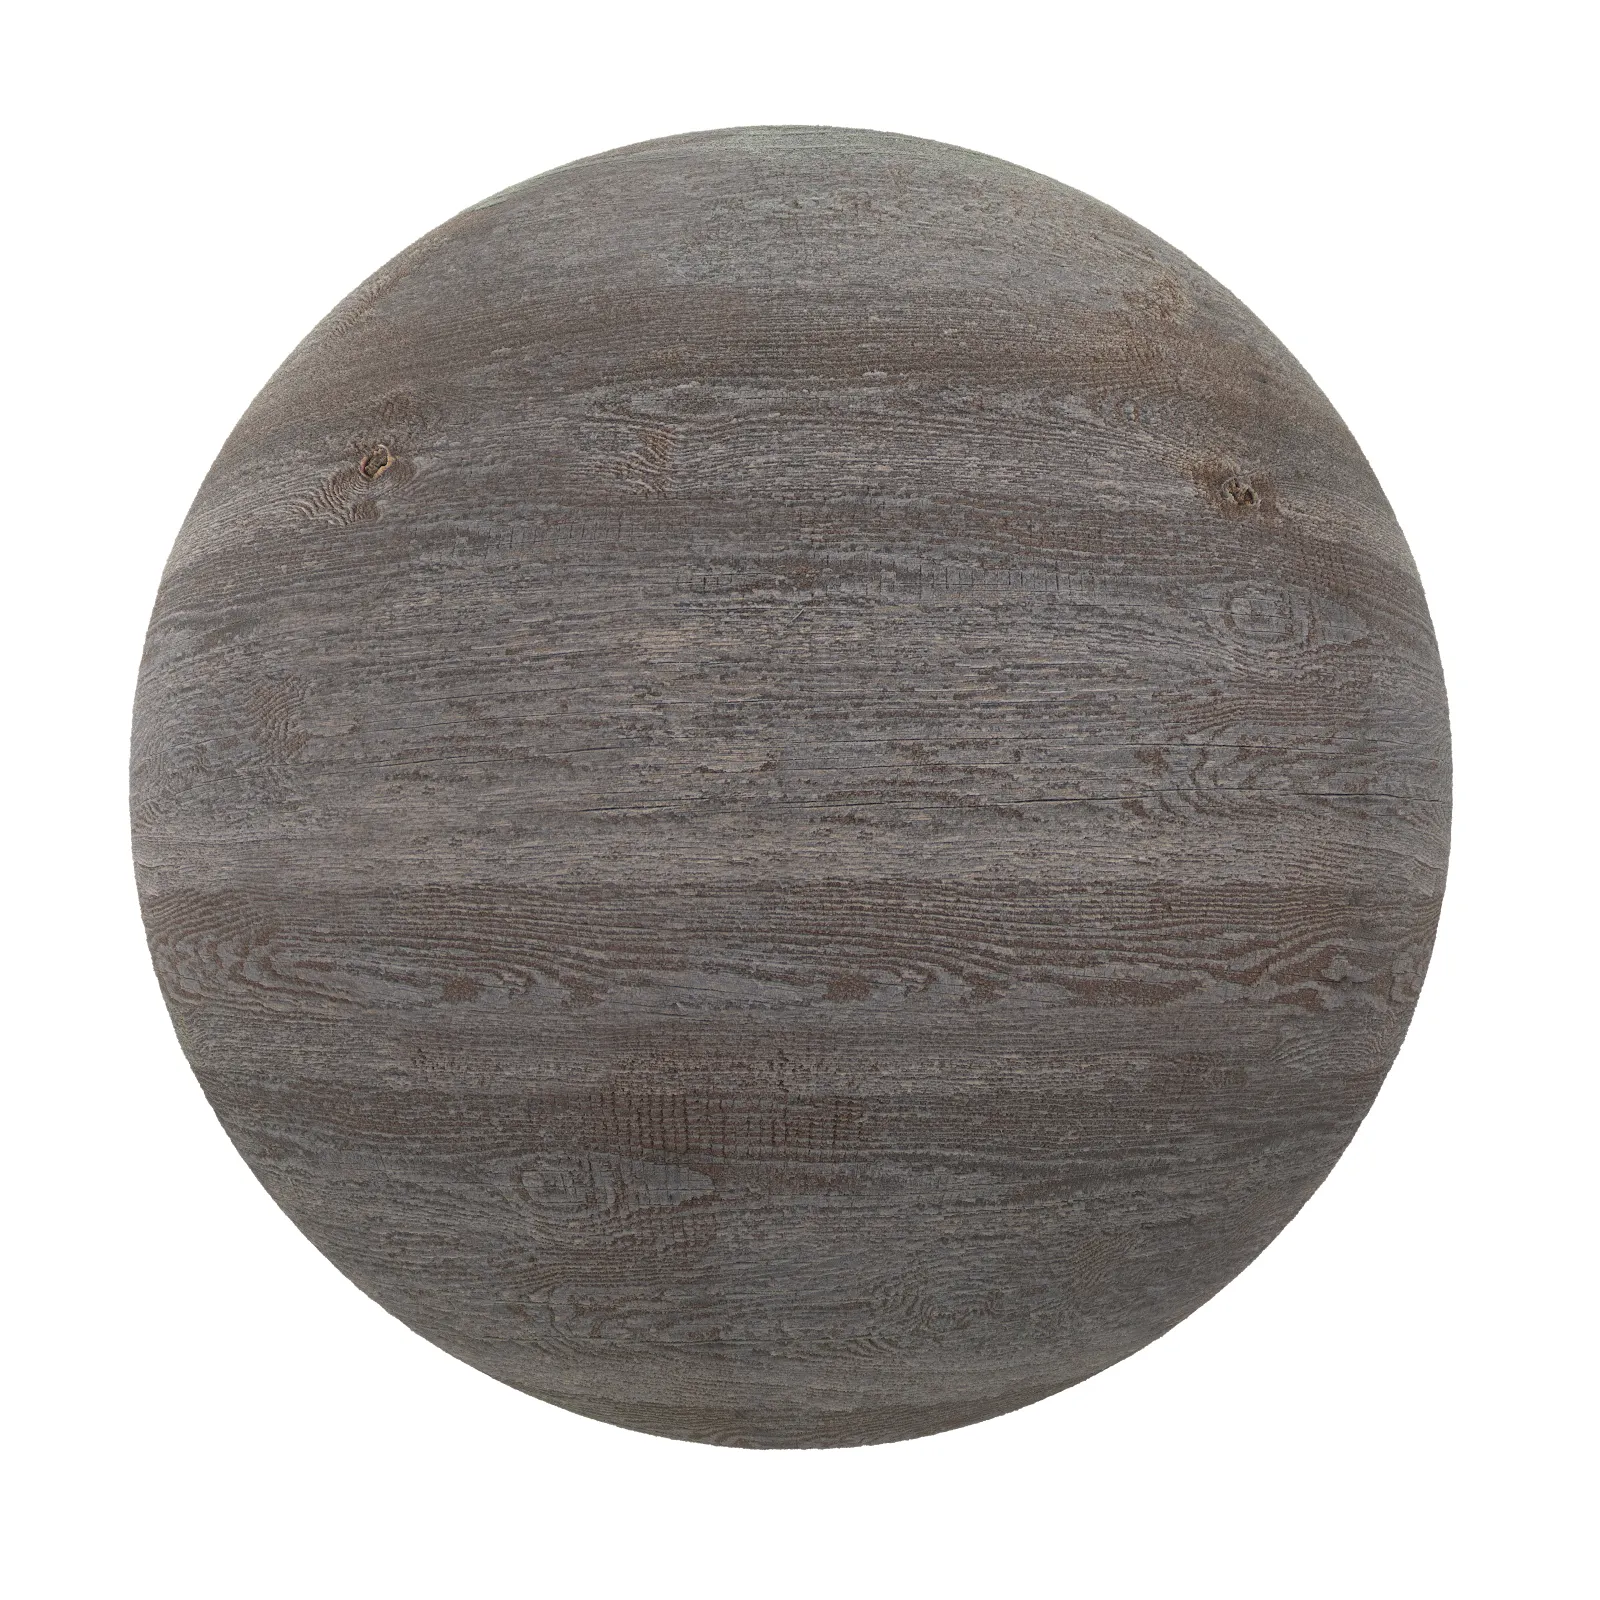 3ds Max Files – Texture – 8 – Wood Texture – 115 – Wood Texture by Minh Nguyen